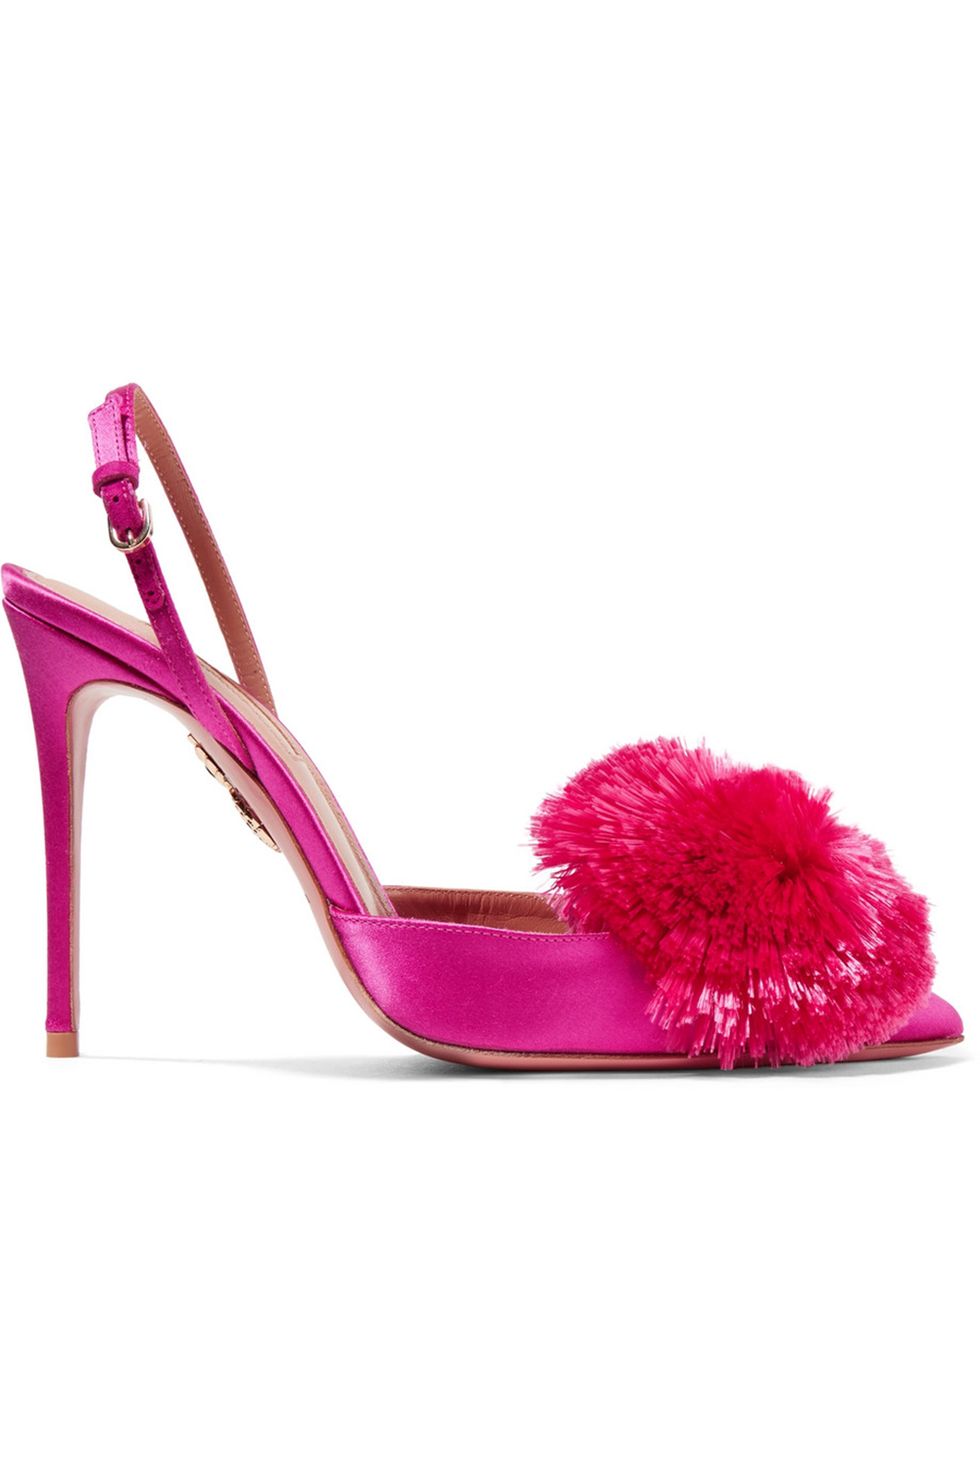 Footwear, Pink, High heels, Magenta, Slingback, Sandal, Shoe, Bridal shoe, Basic pump, 